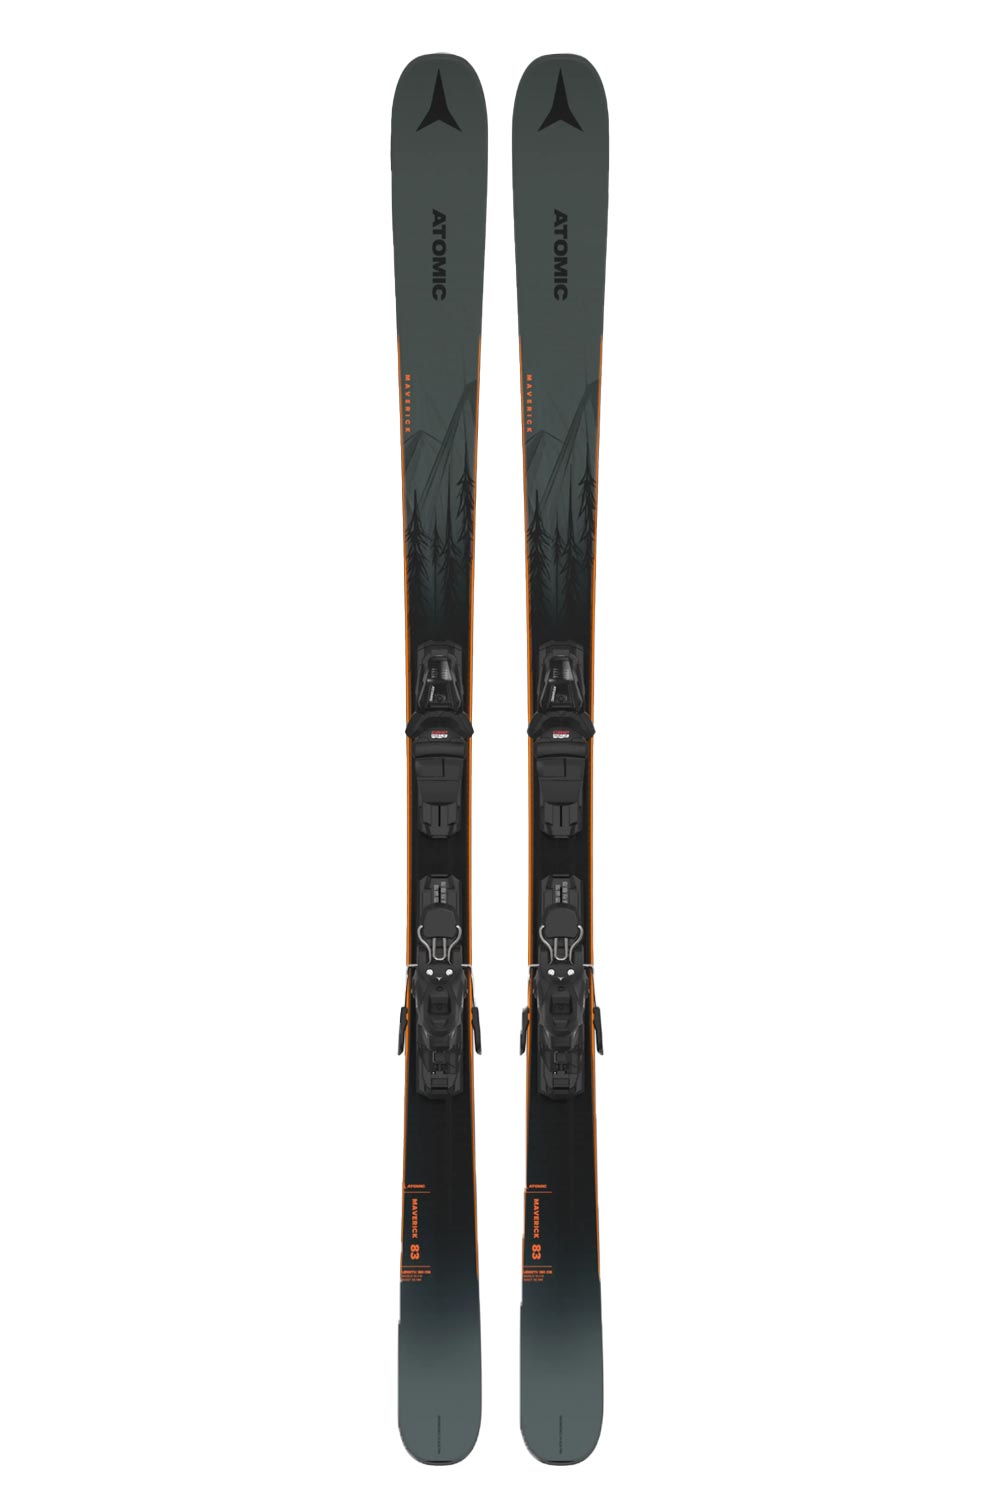 Atomic Maverick 83 Skis with bindings, black & green skis, black bindings